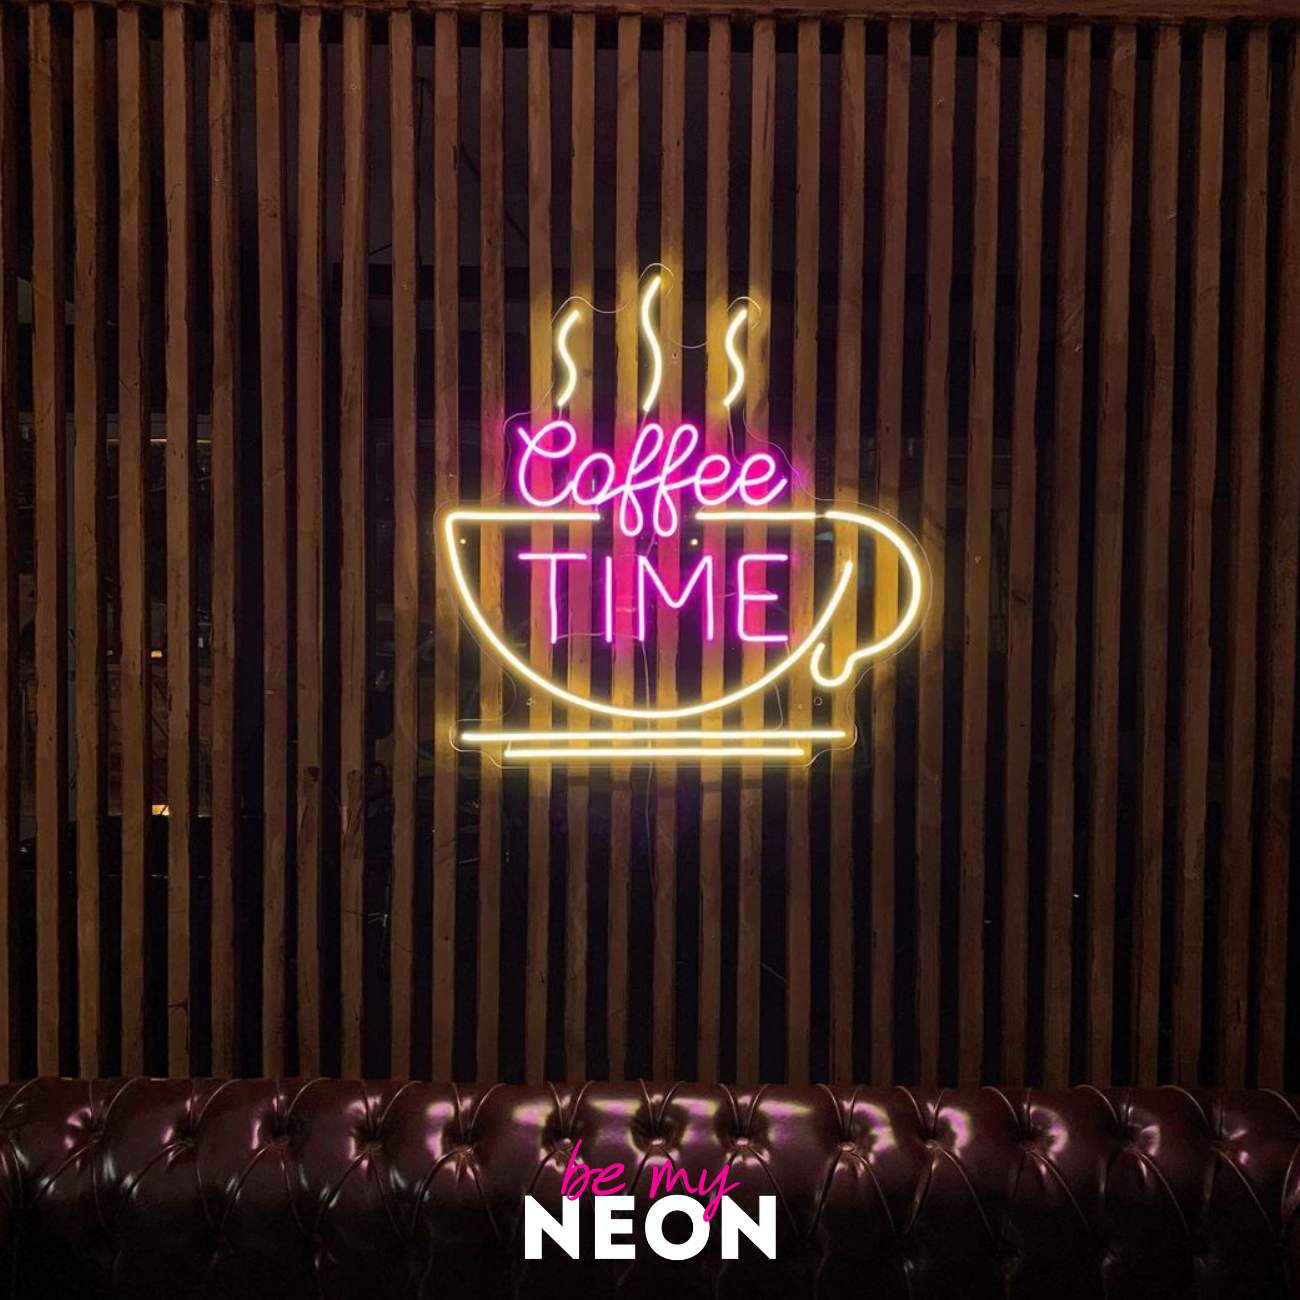 "Coffee TIME" LED Neonschild